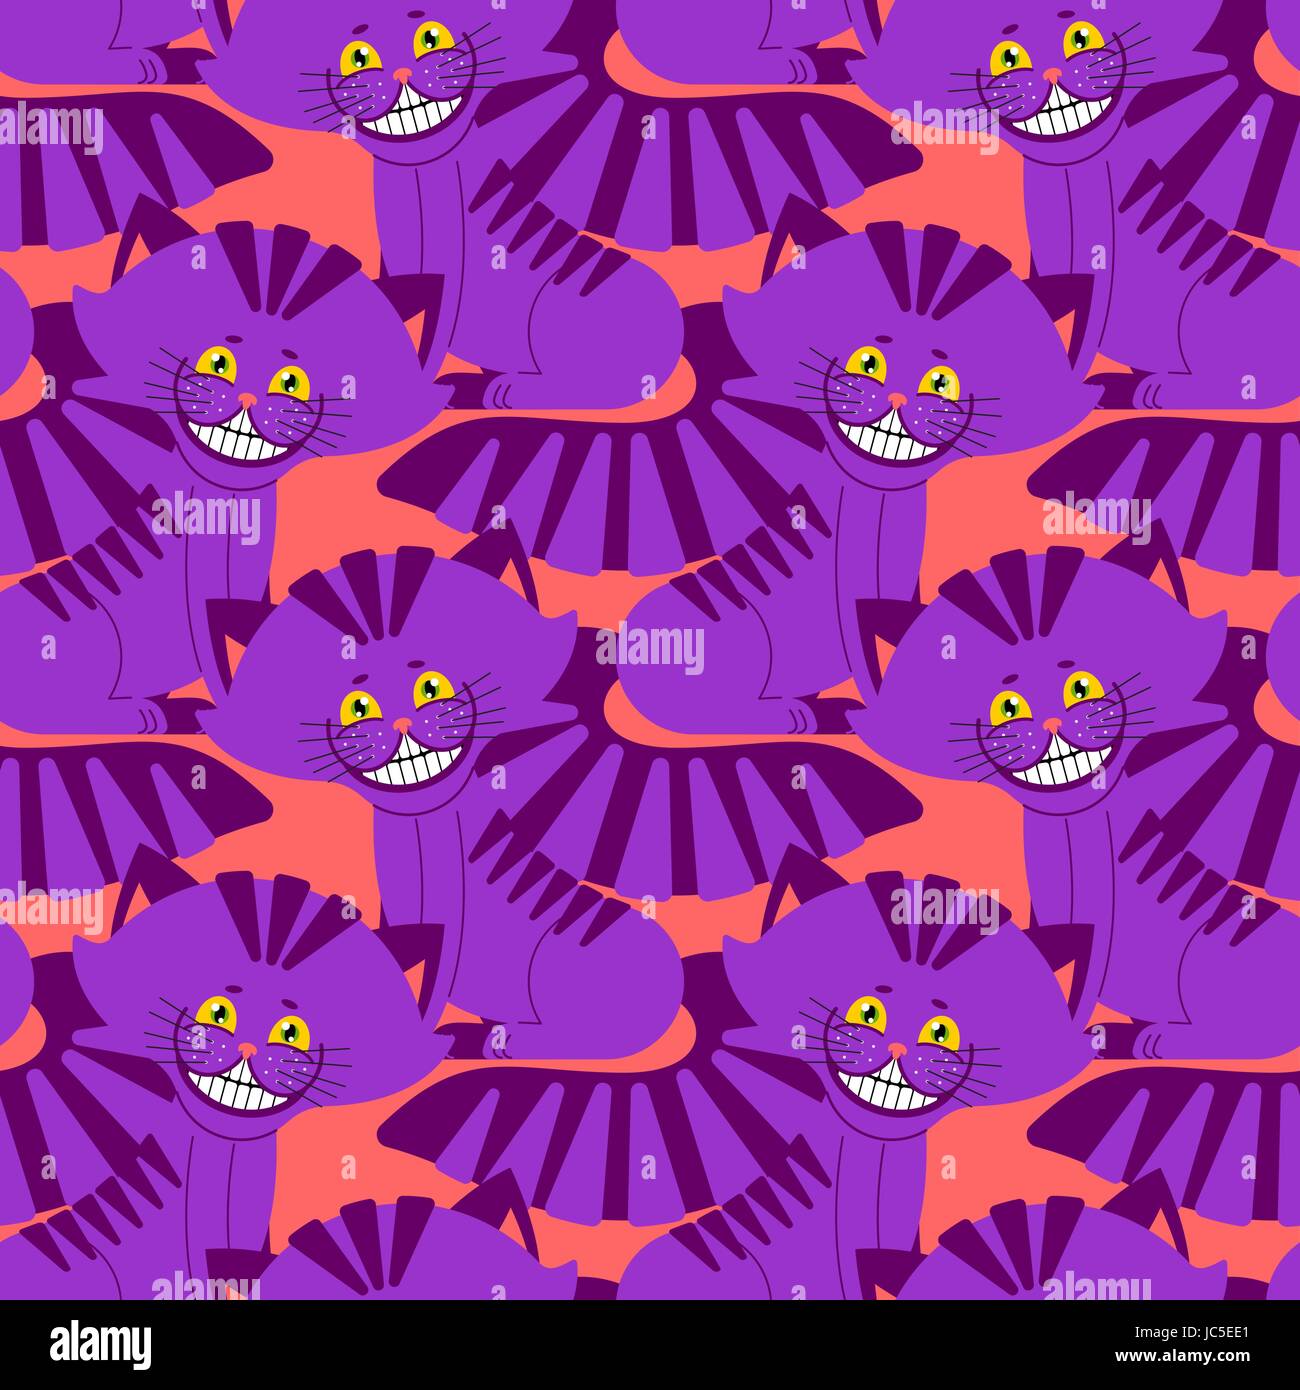 Cheshire cat smile pattern. texture Fantastic pet alice in wonderland. Magic animal background Stock Vector